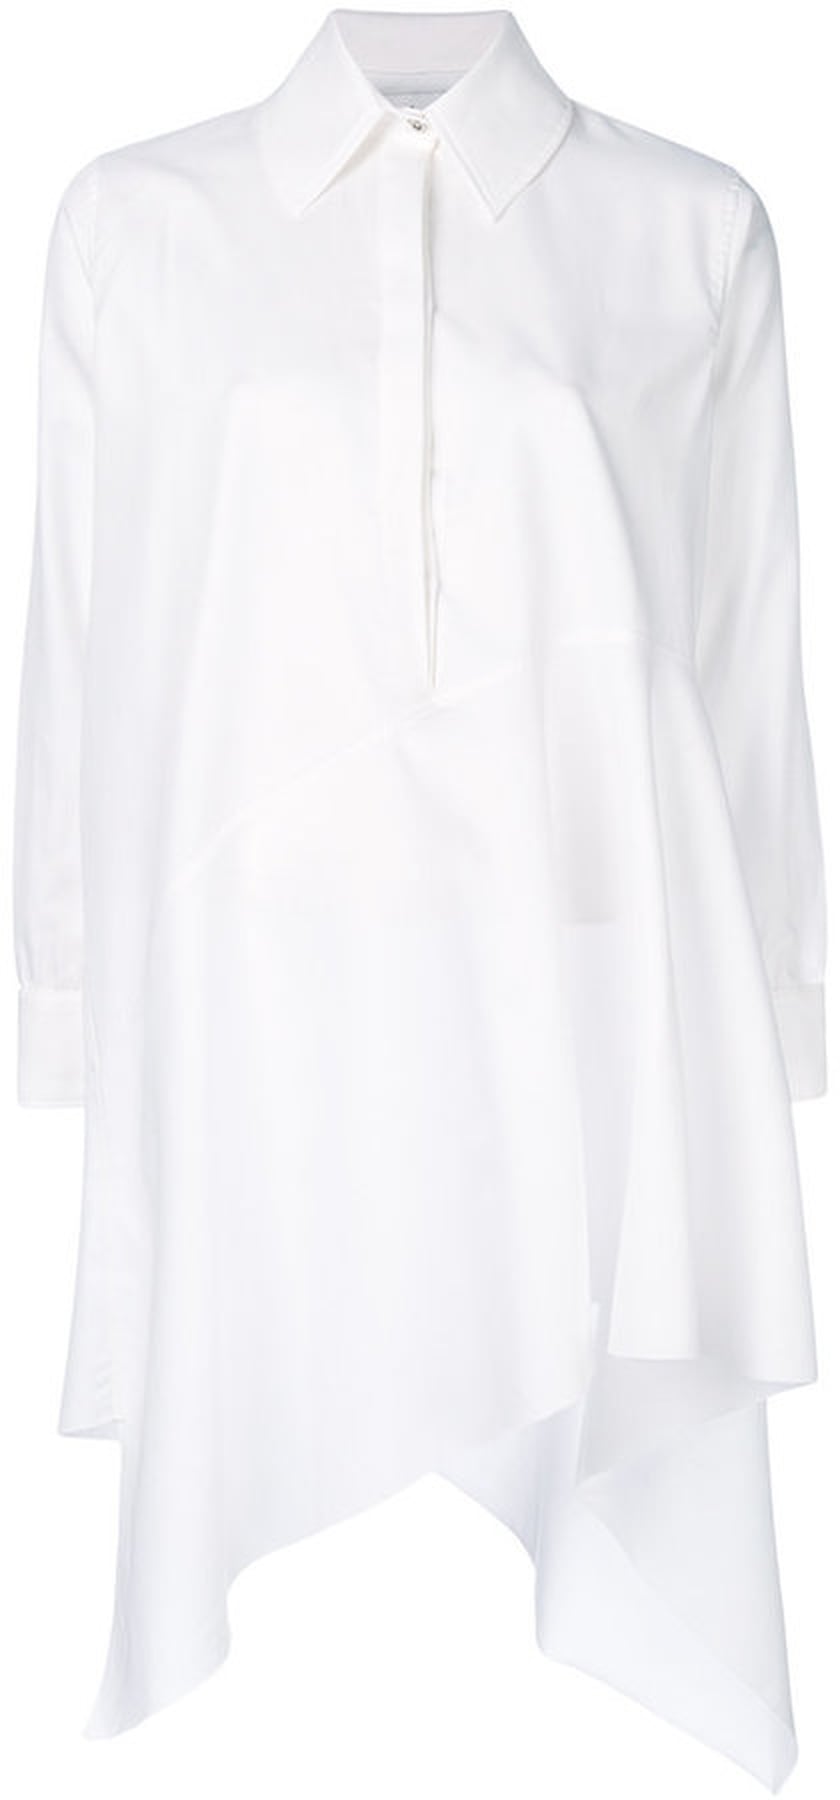 Queen Rania White Shirt Dress | POPSUGAR Fashion